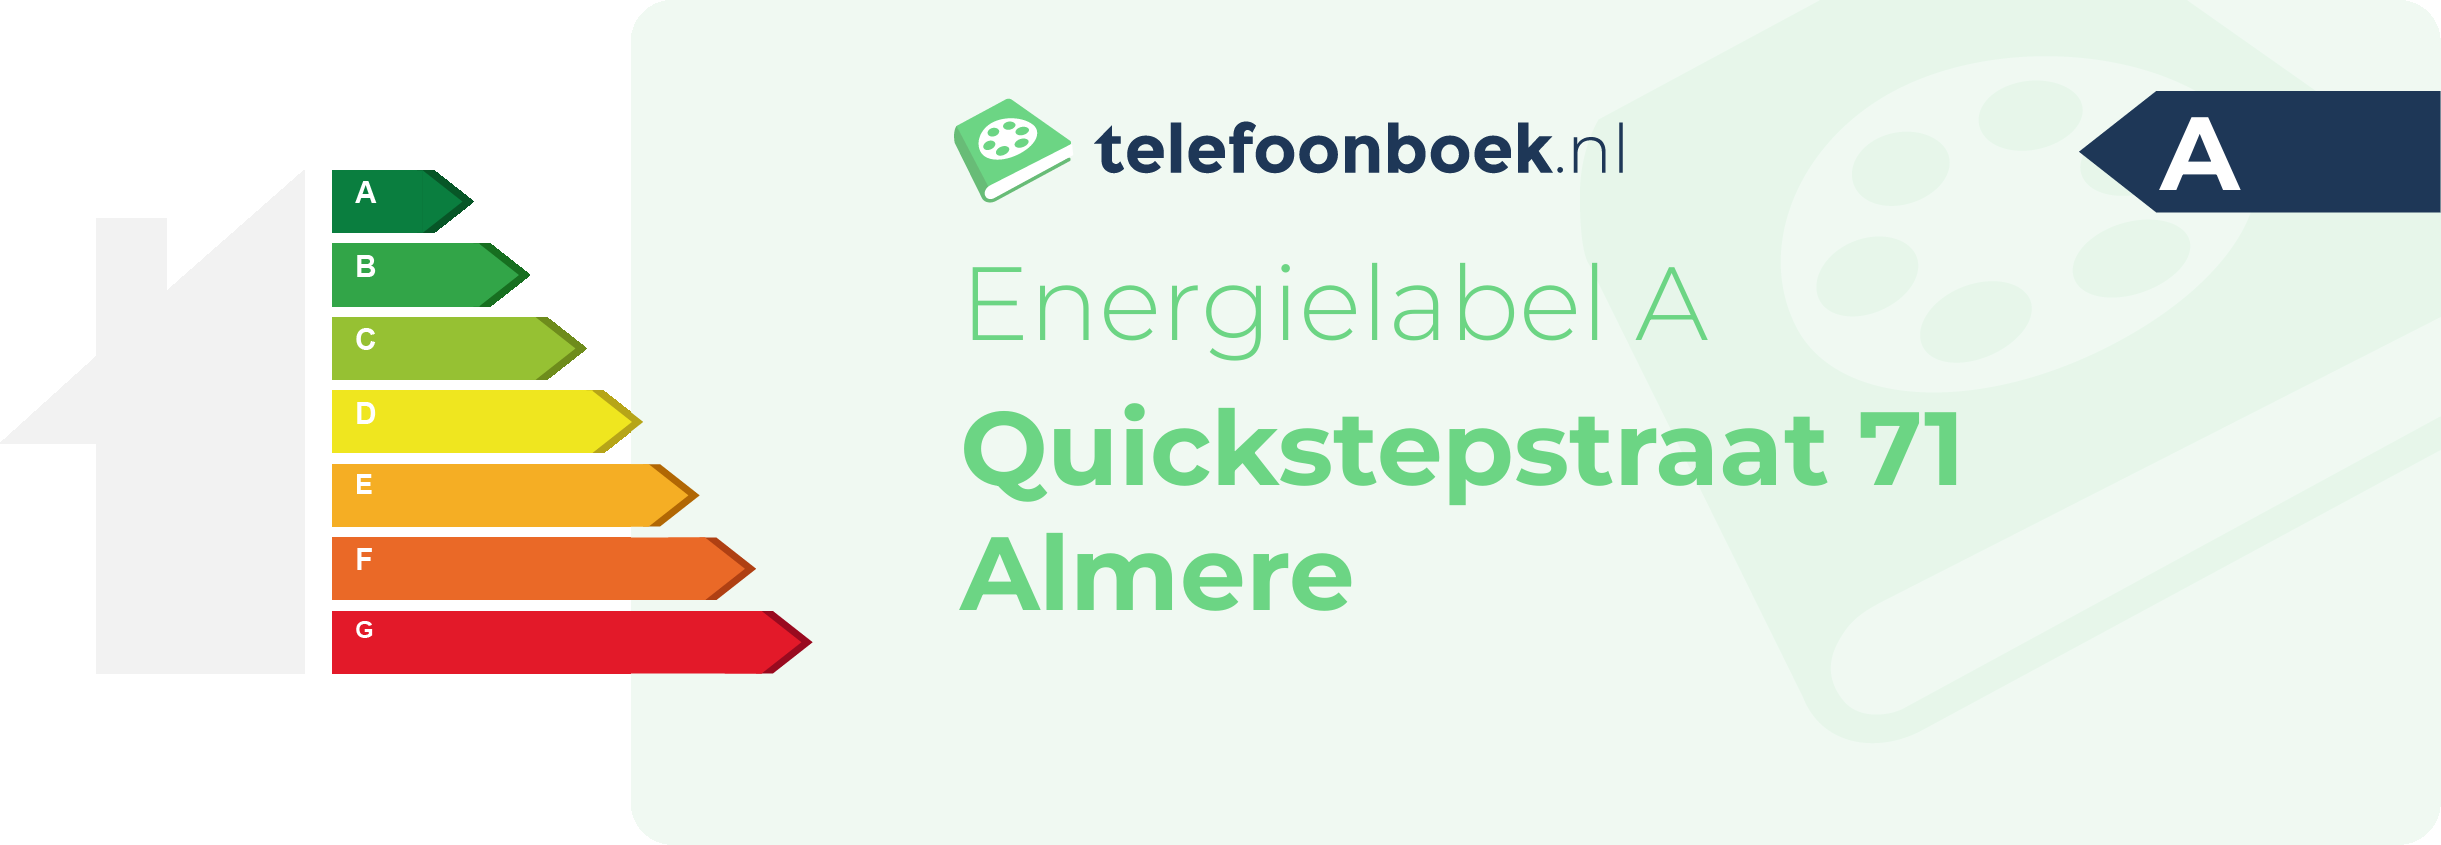 Energielabel Quickstepstraat 71 Almere